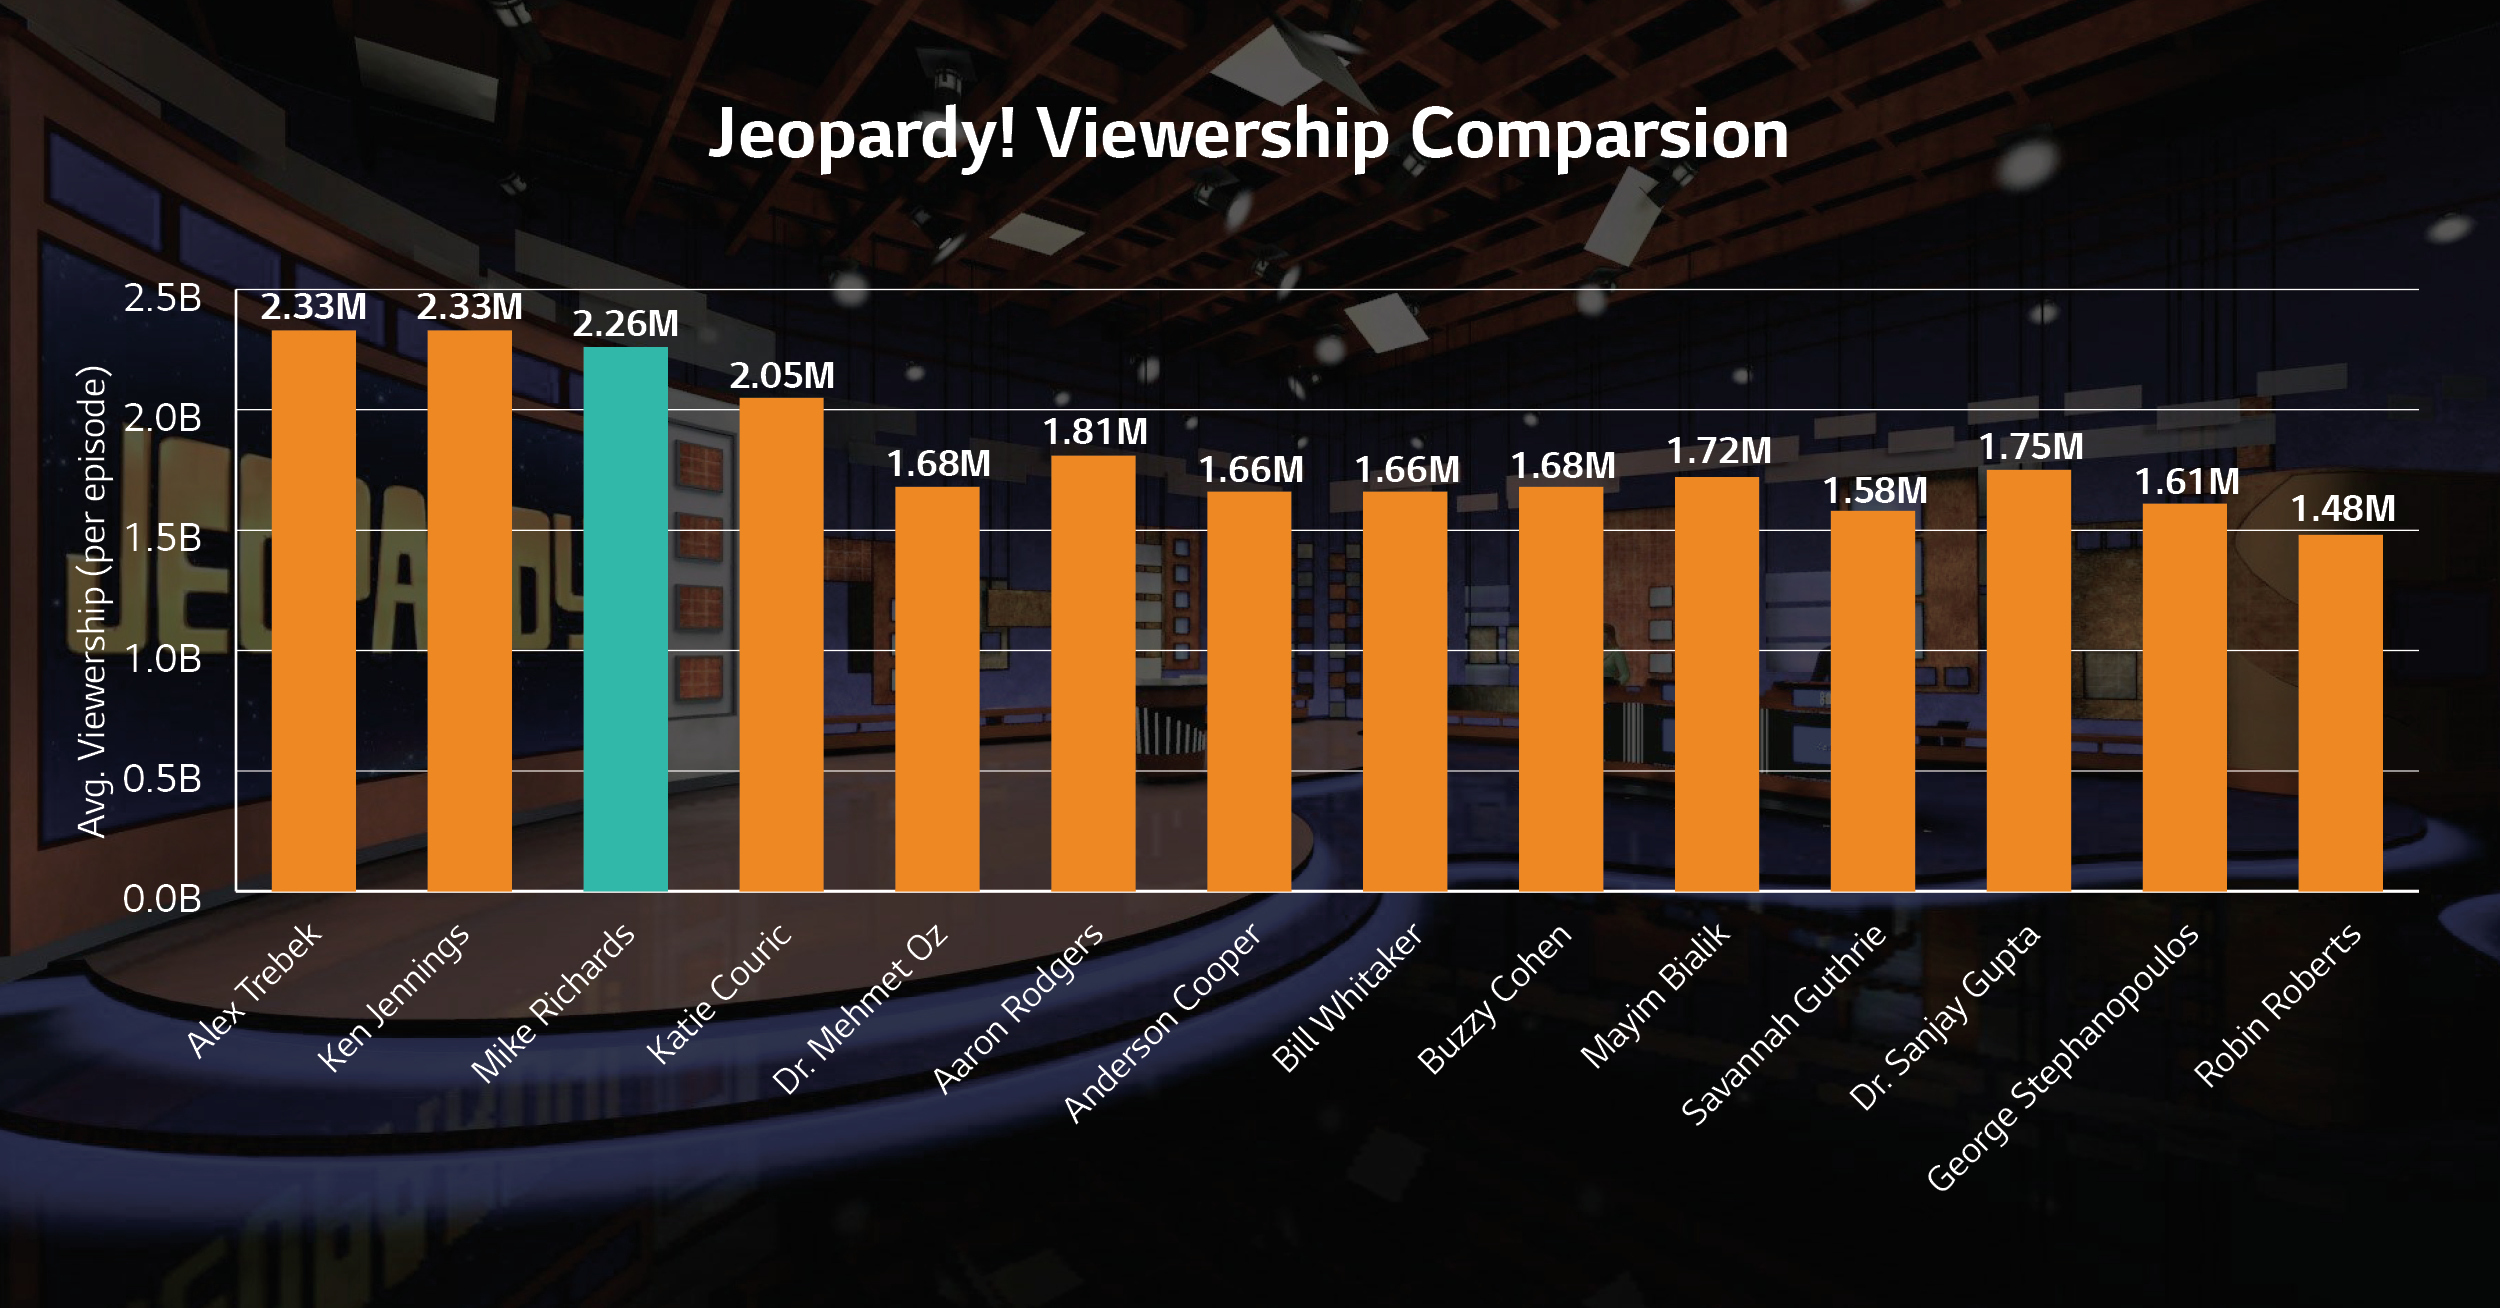 LG-Ads-Jeopardy-Viewership-Comparison